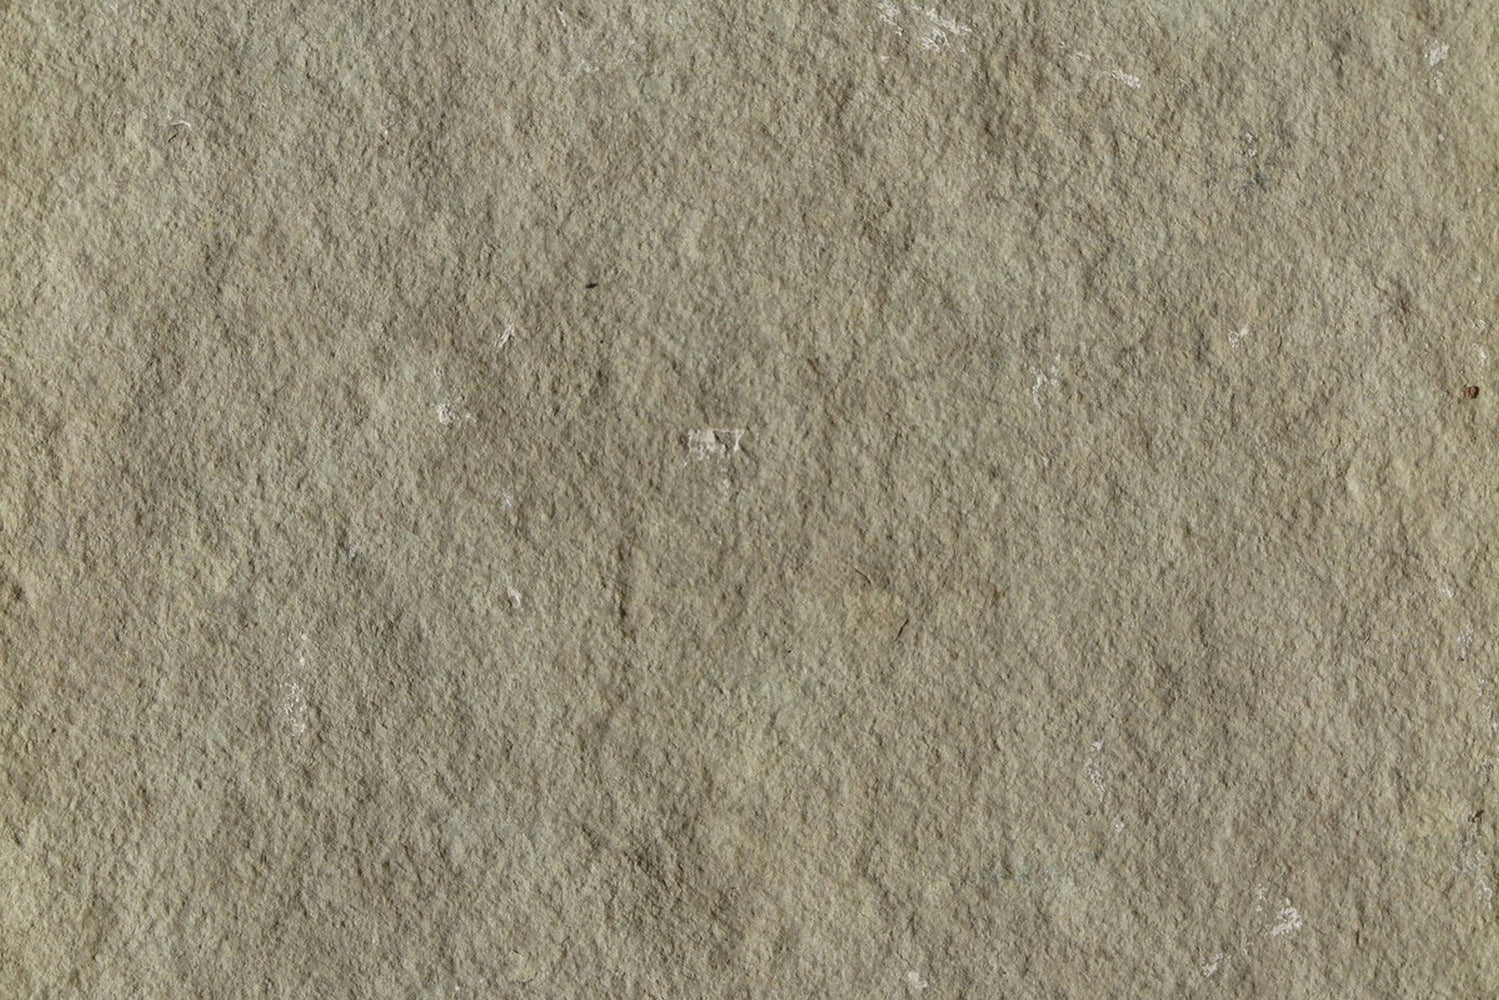 Full Tile Sample - French Vanilla Limestone Tile - 12" x 12" x 3/8" - 1/2" Natural Cleft Face, Flat Back